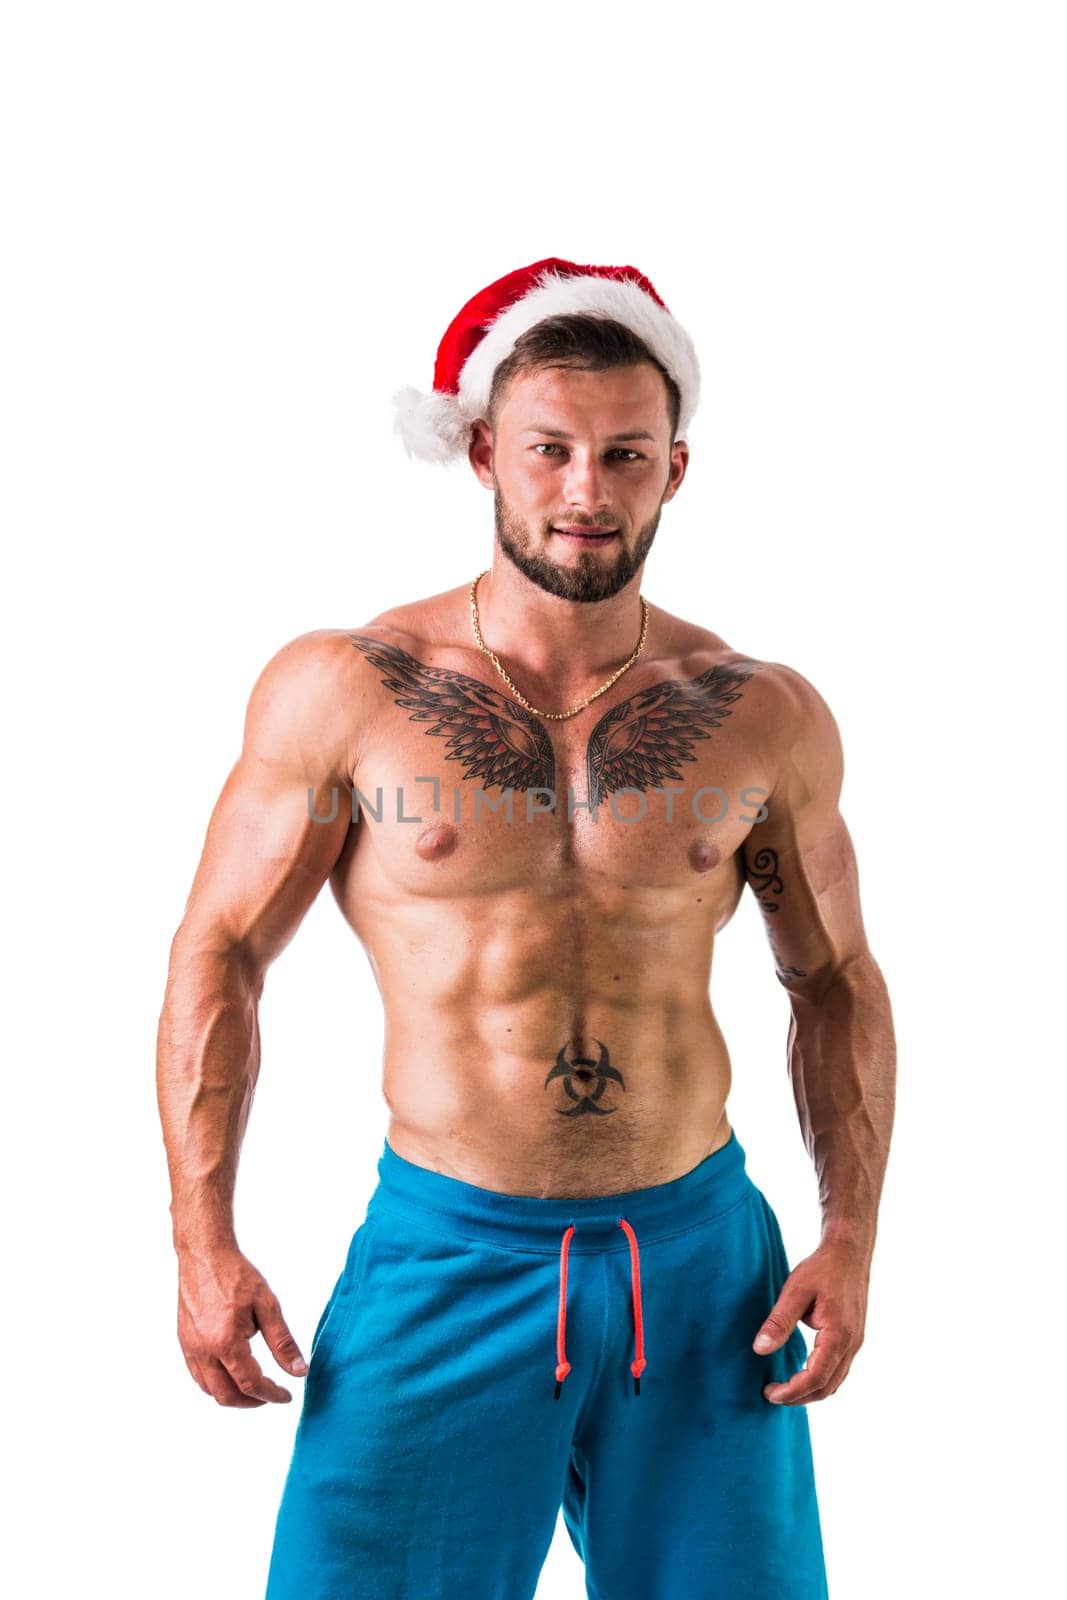 Christmas season: muscular bodybuilder shirtless wearing Santa Claus red hat, isolated on white